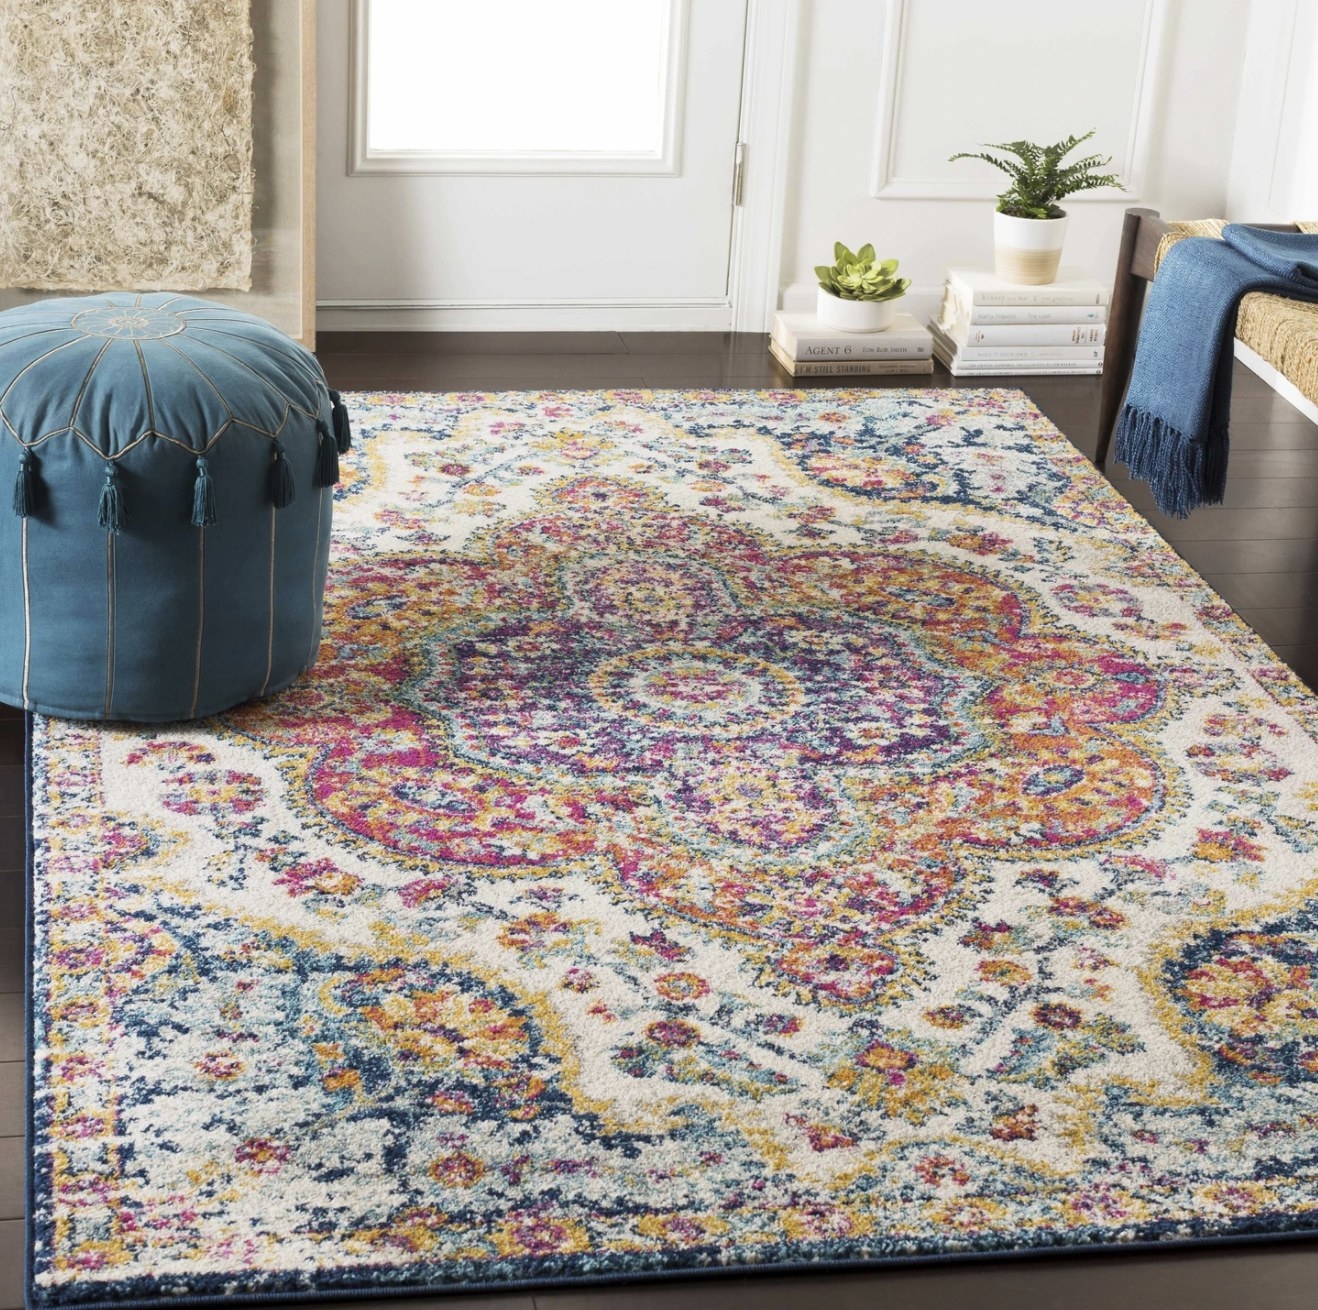 The multicolored rug